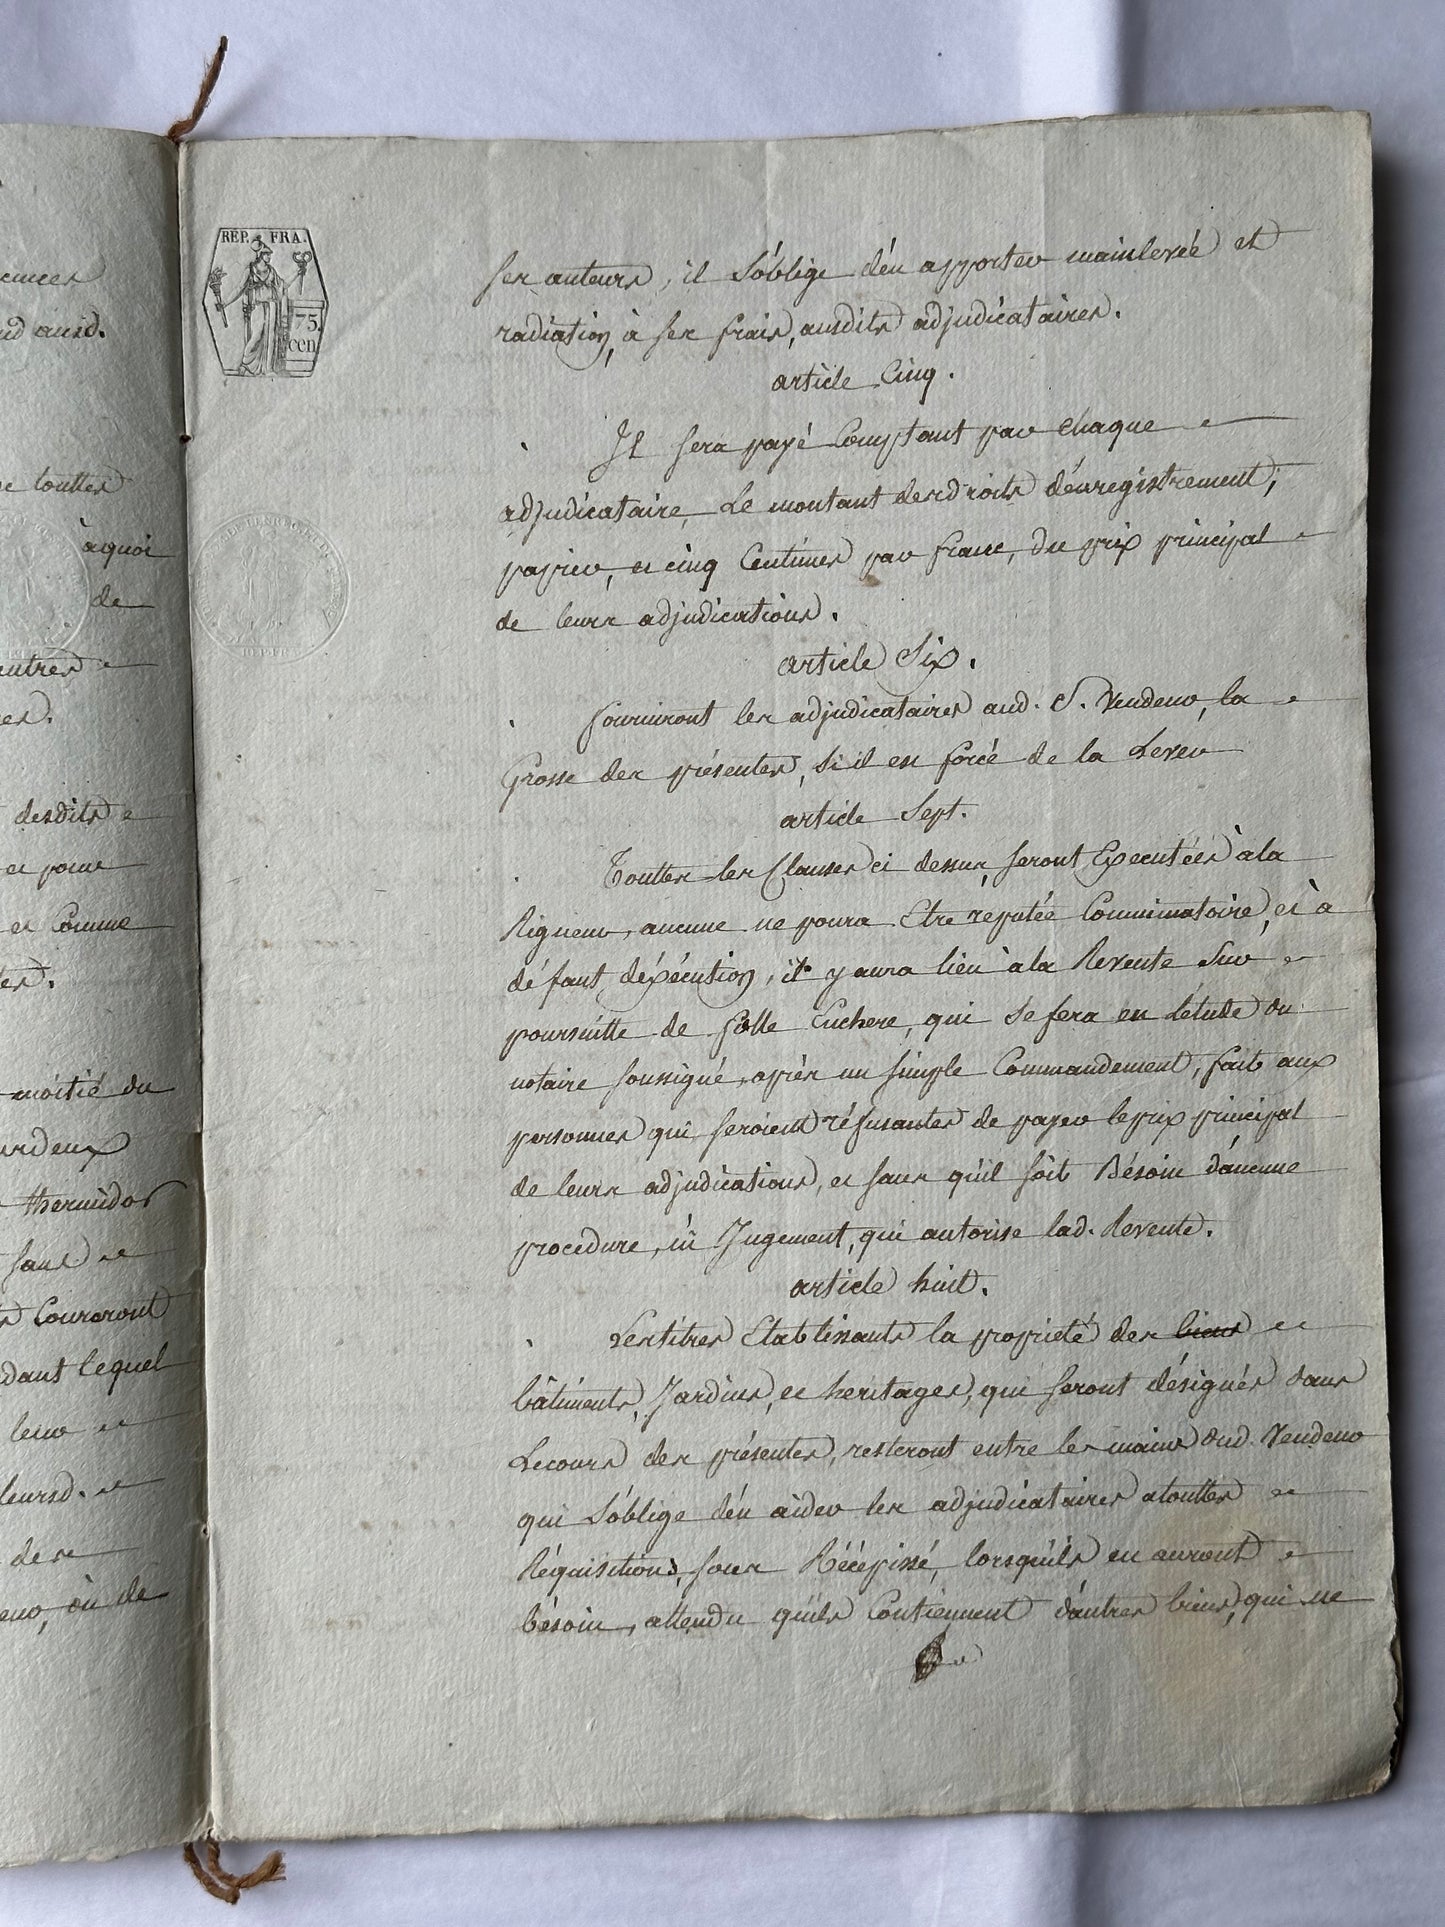 1805 French Legal Manuscript